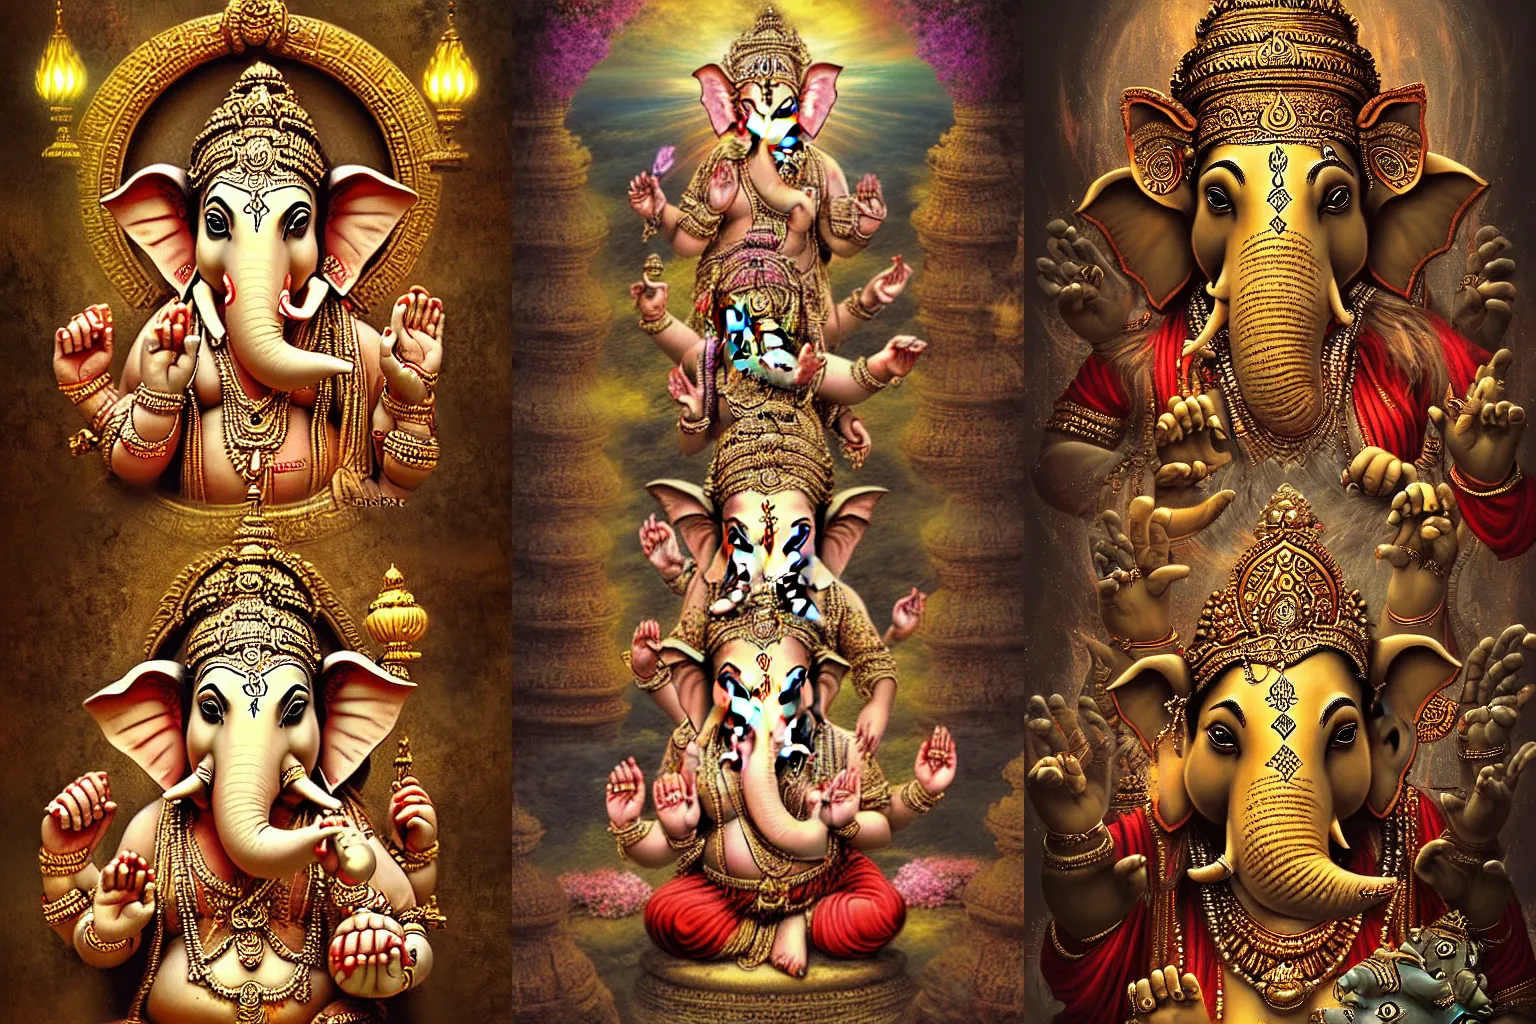 Prompt: The gate to the eternal kingdom of Ganesha, fantasy, digital art, HD, detailed.